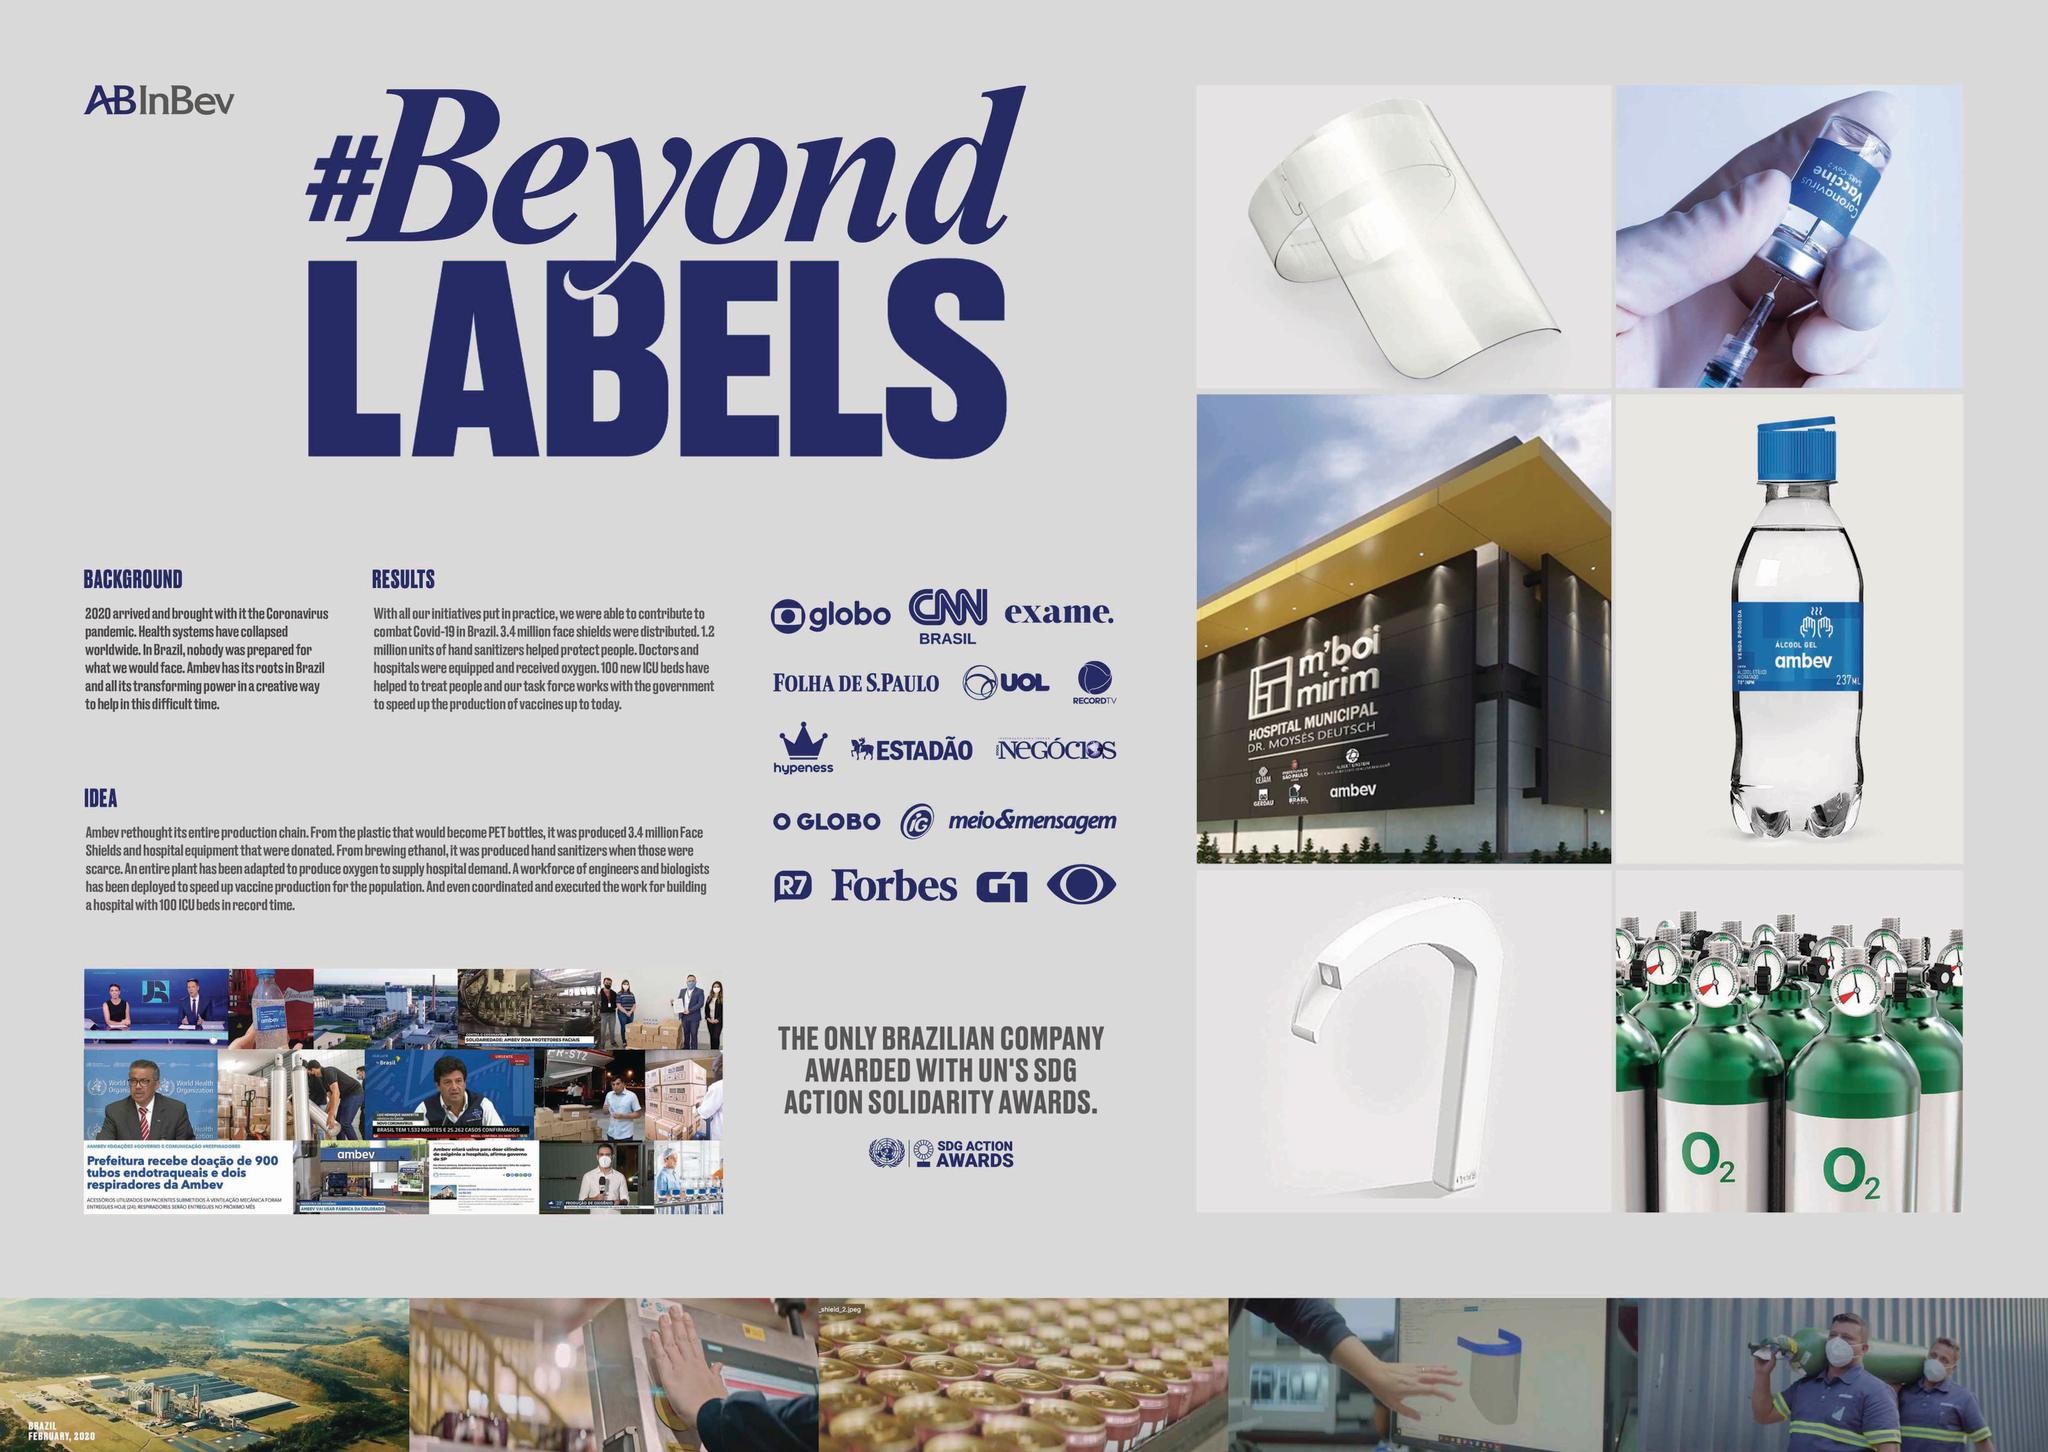 Beyond Labels